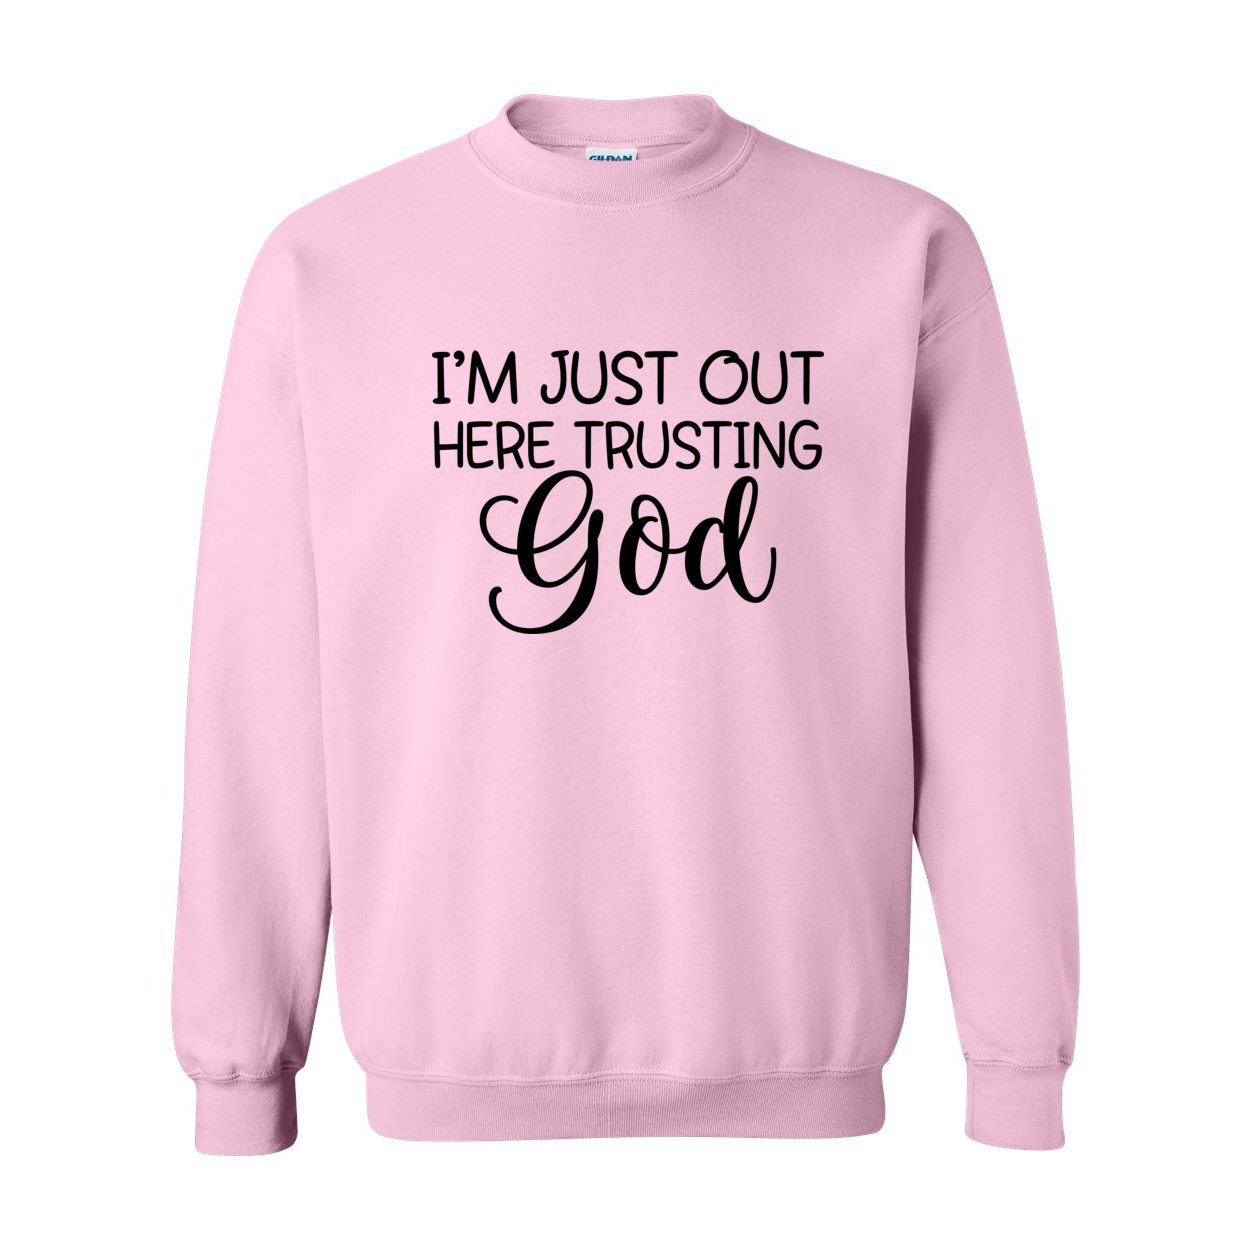 Trusting God Crewneck Sweatshirt